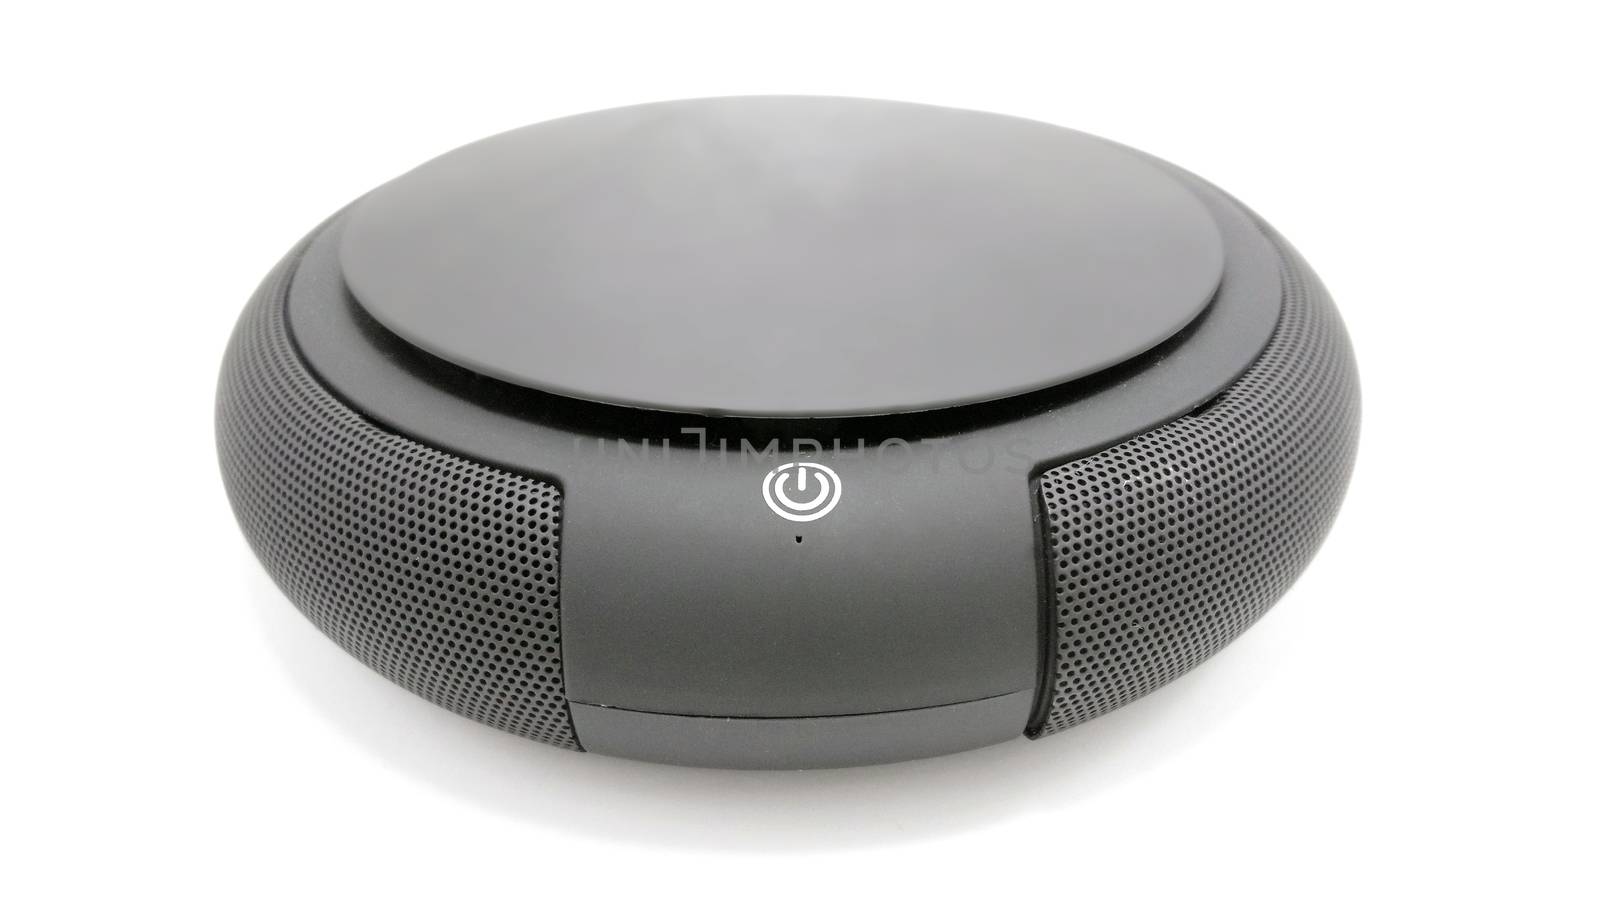 Black circular wireless sound speaker use to listen music and entertainment